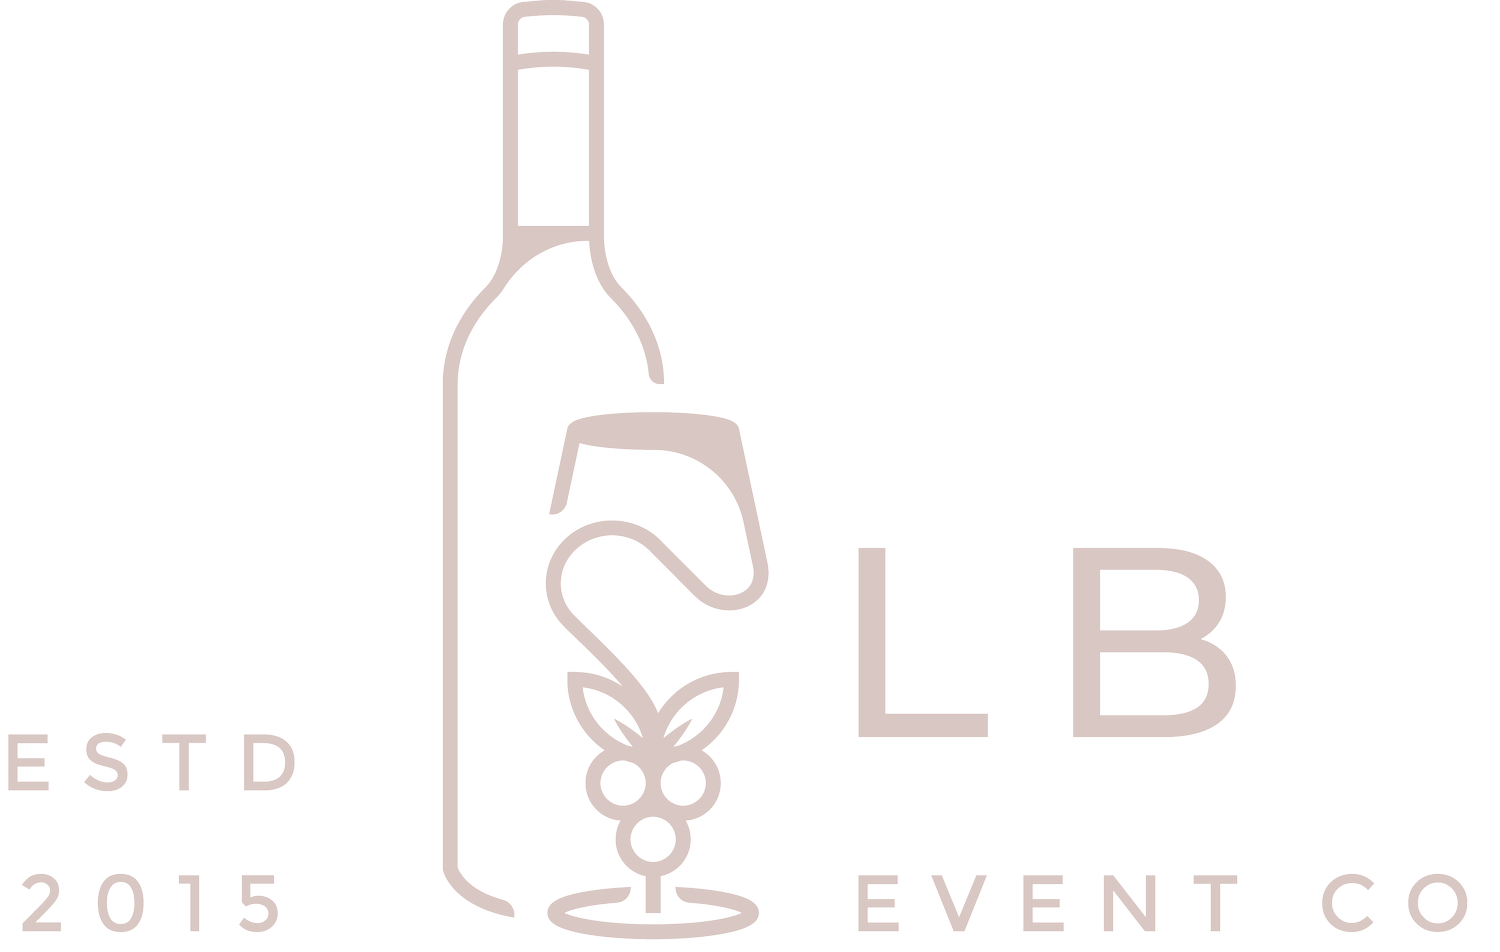 Long Beach Event Co